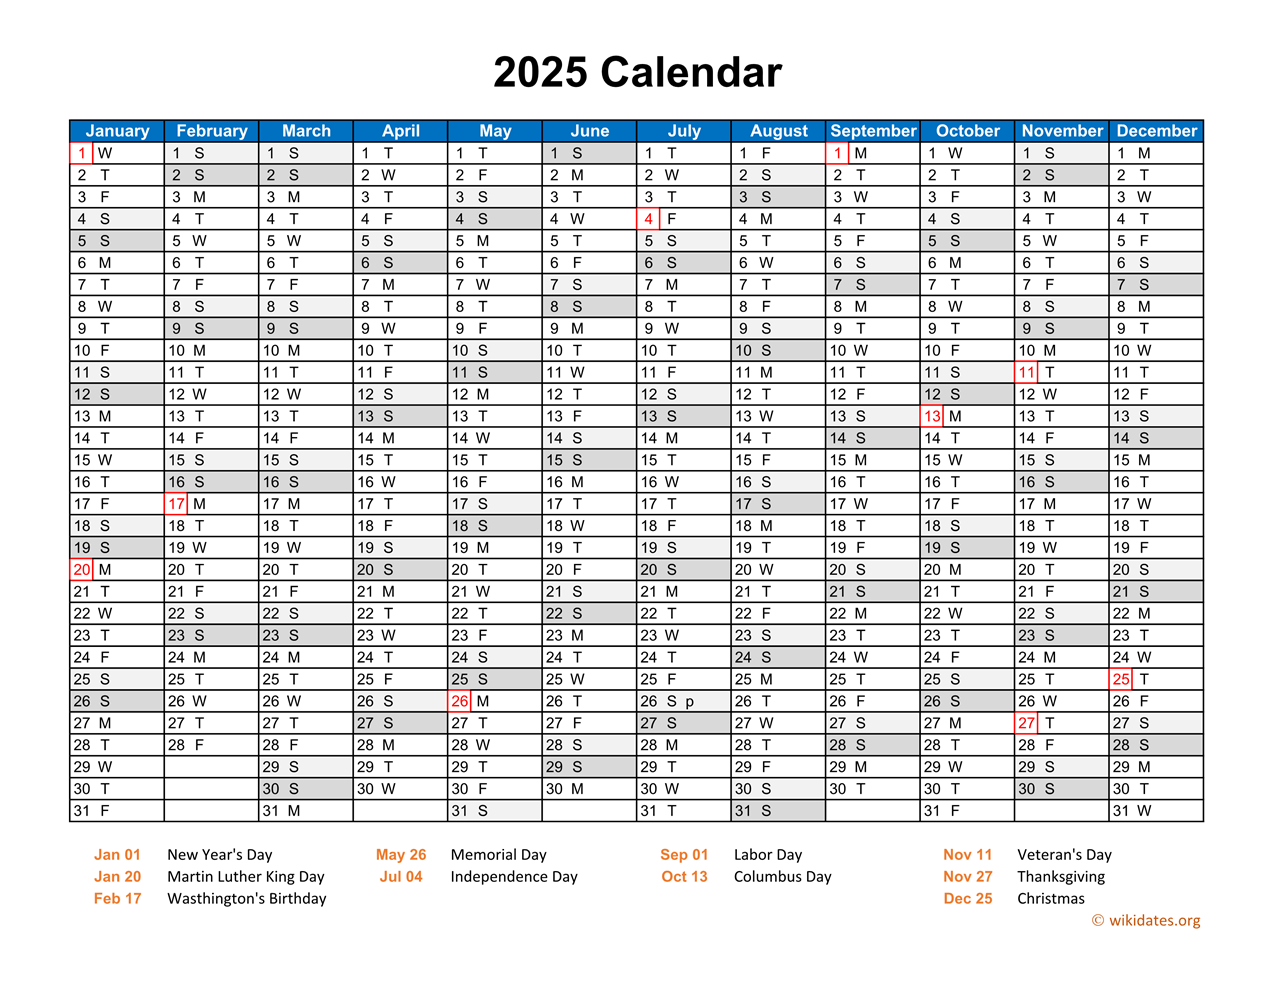 2025 Calendar Horizontal One Page WikiDates org